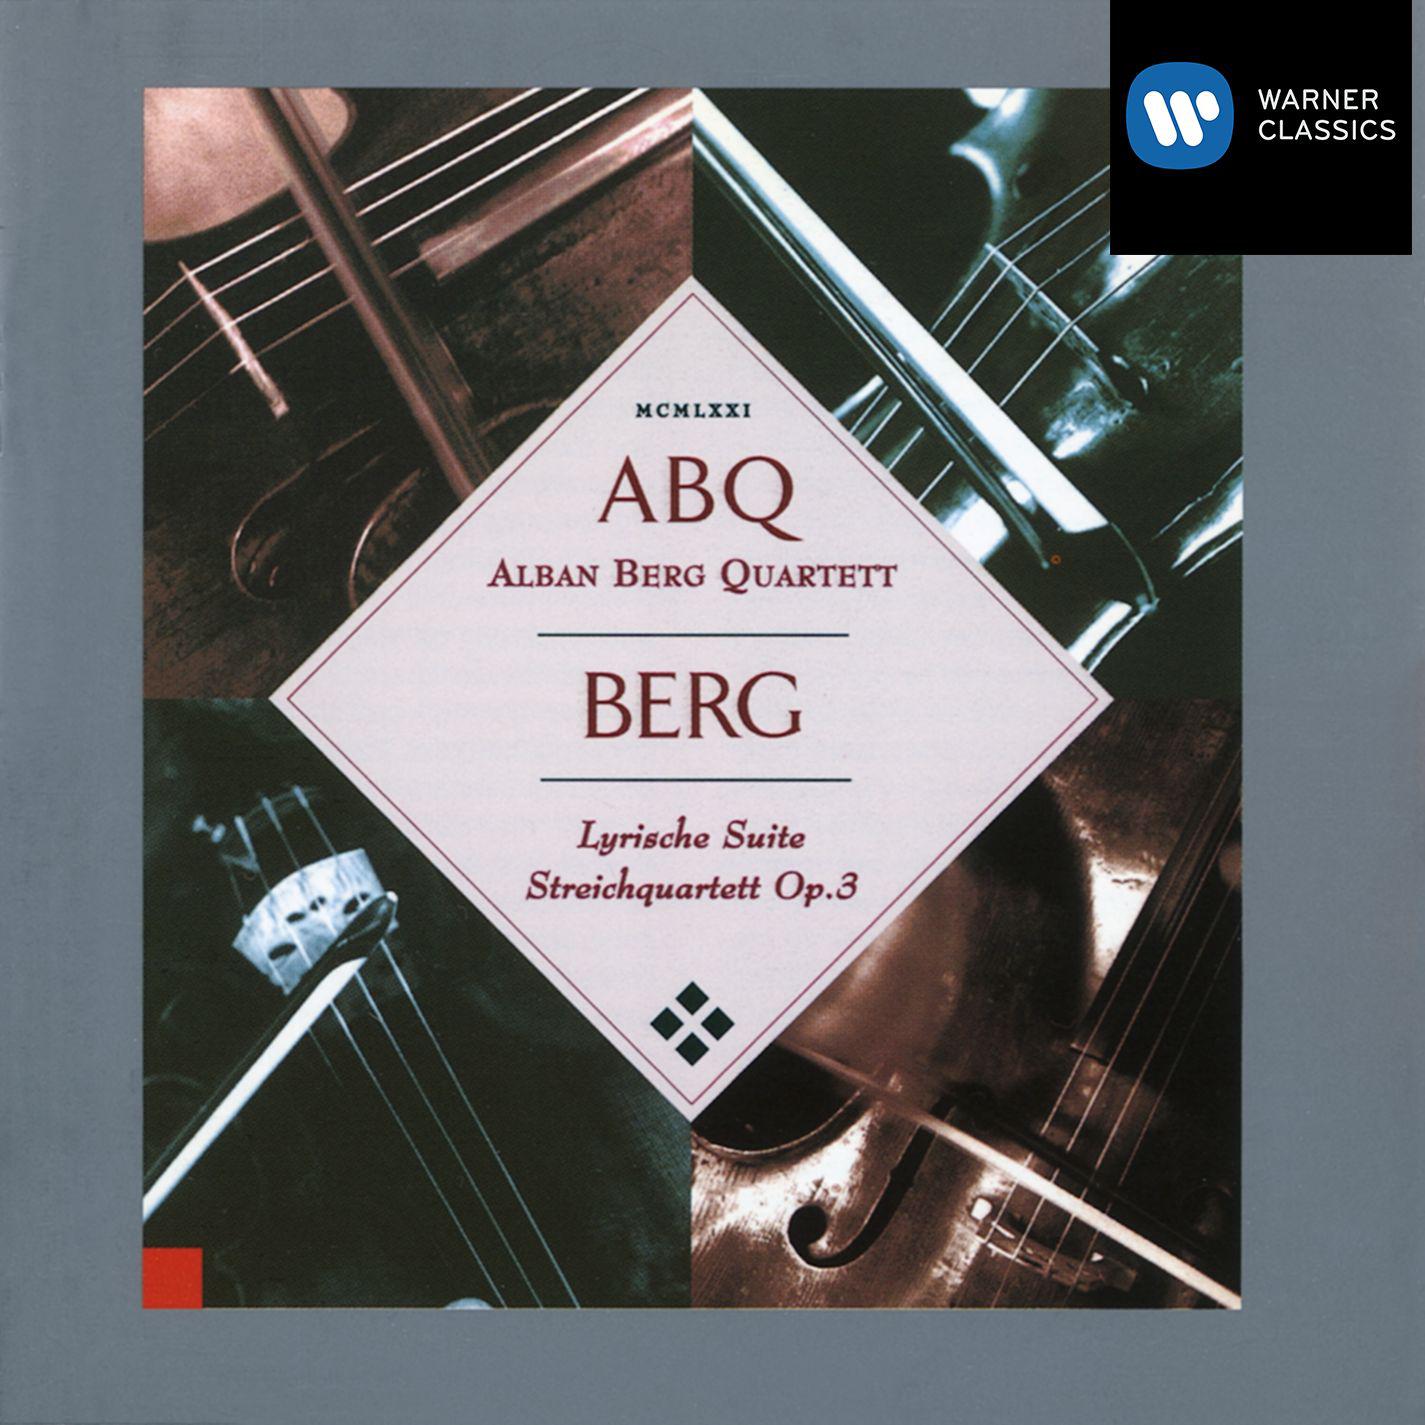 Prelude, Fugue and Allegro in E flat BWV998: Fugue